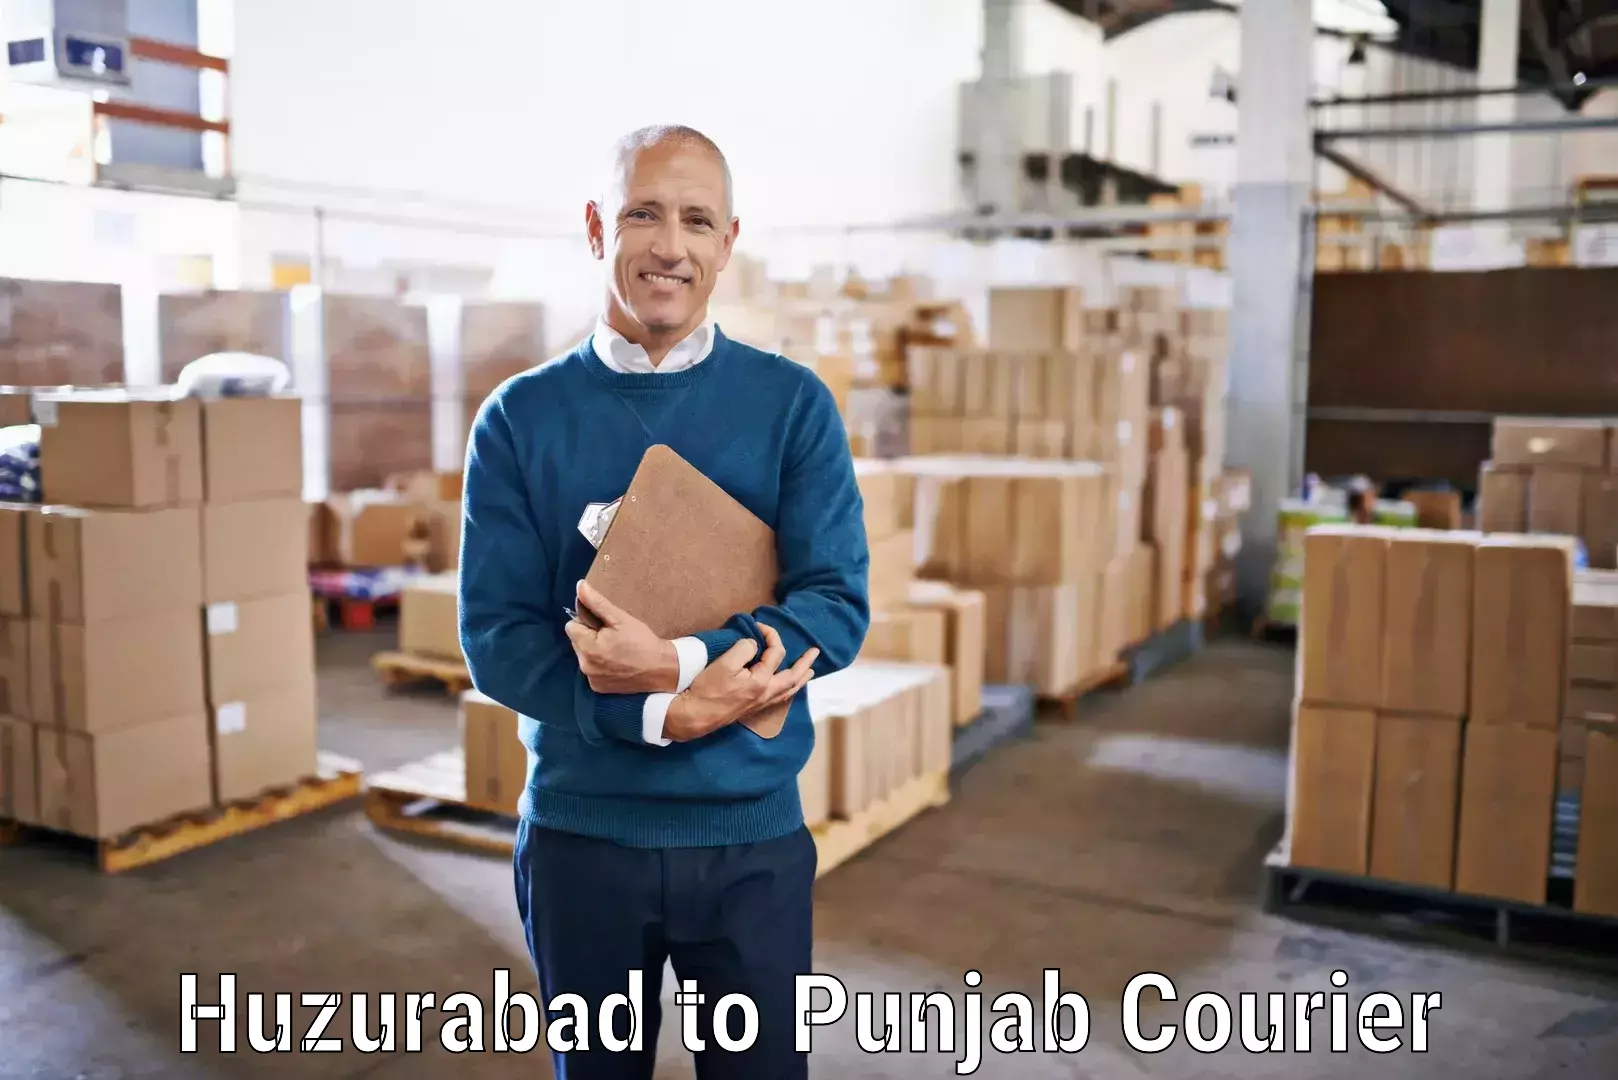 Courier service innovation Huzurabad to Sangrur